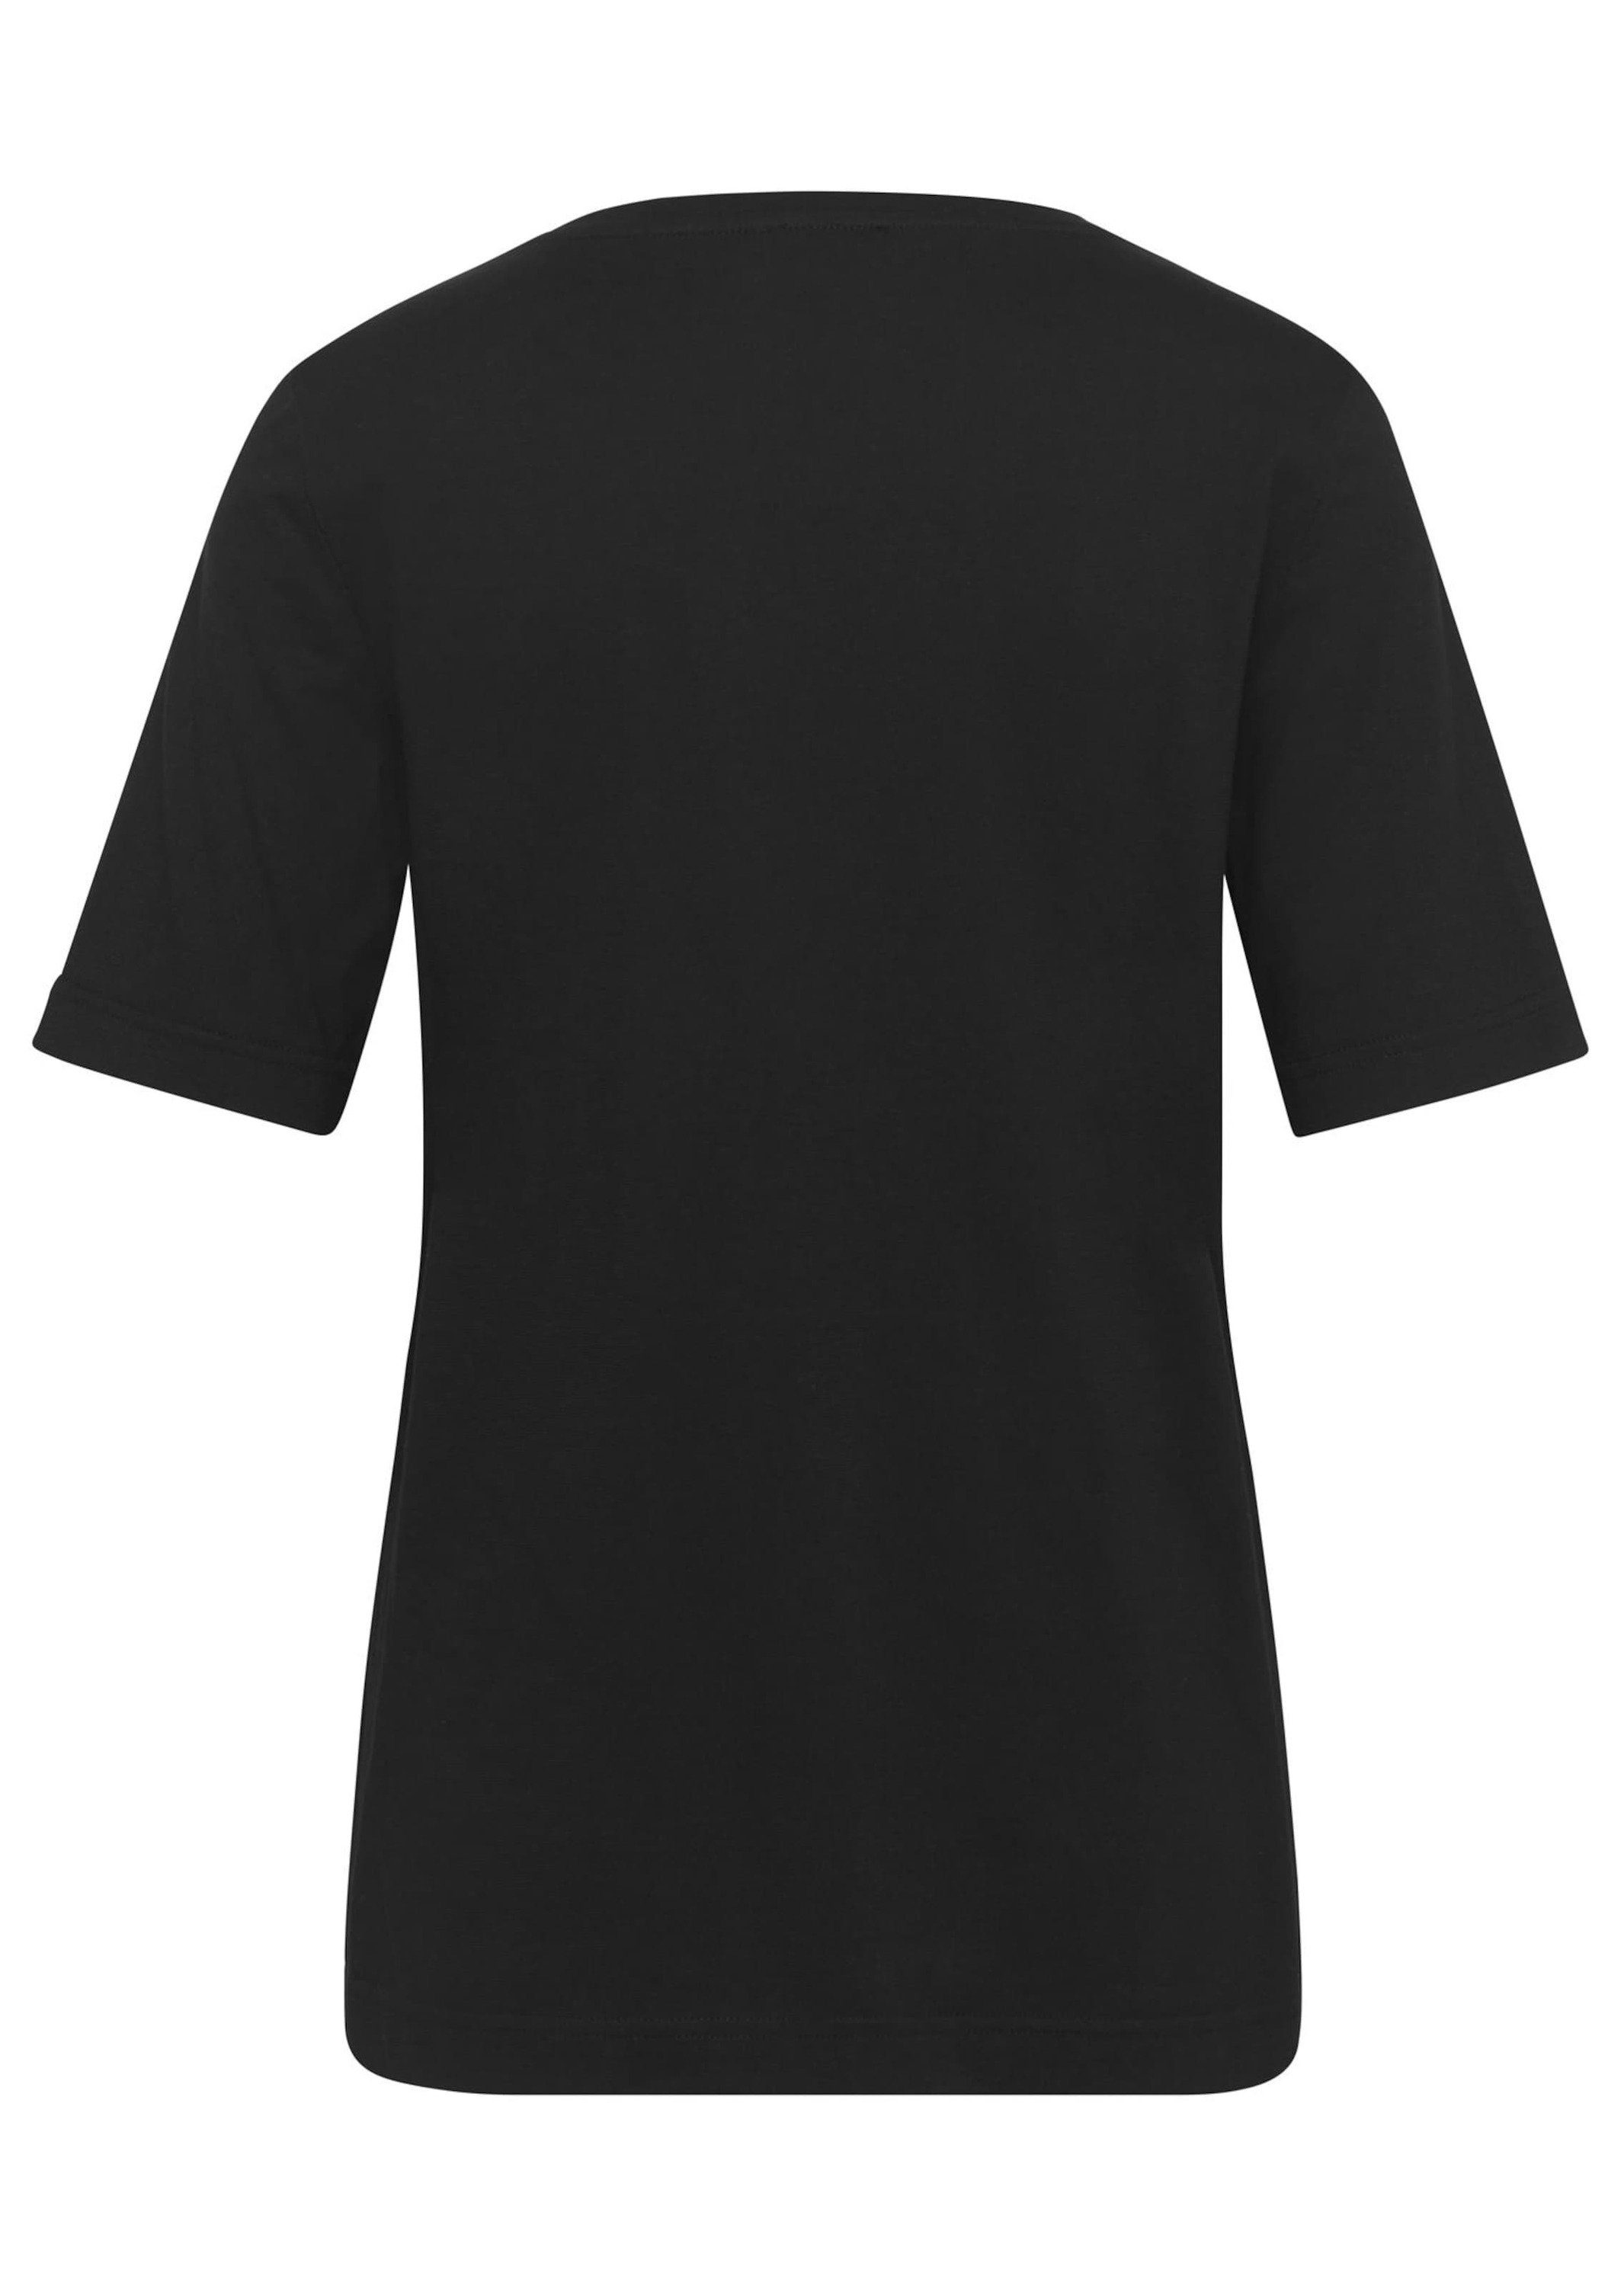 GOLDNER Print-Shirt Kurzgröße: schwarz | T-Shirts